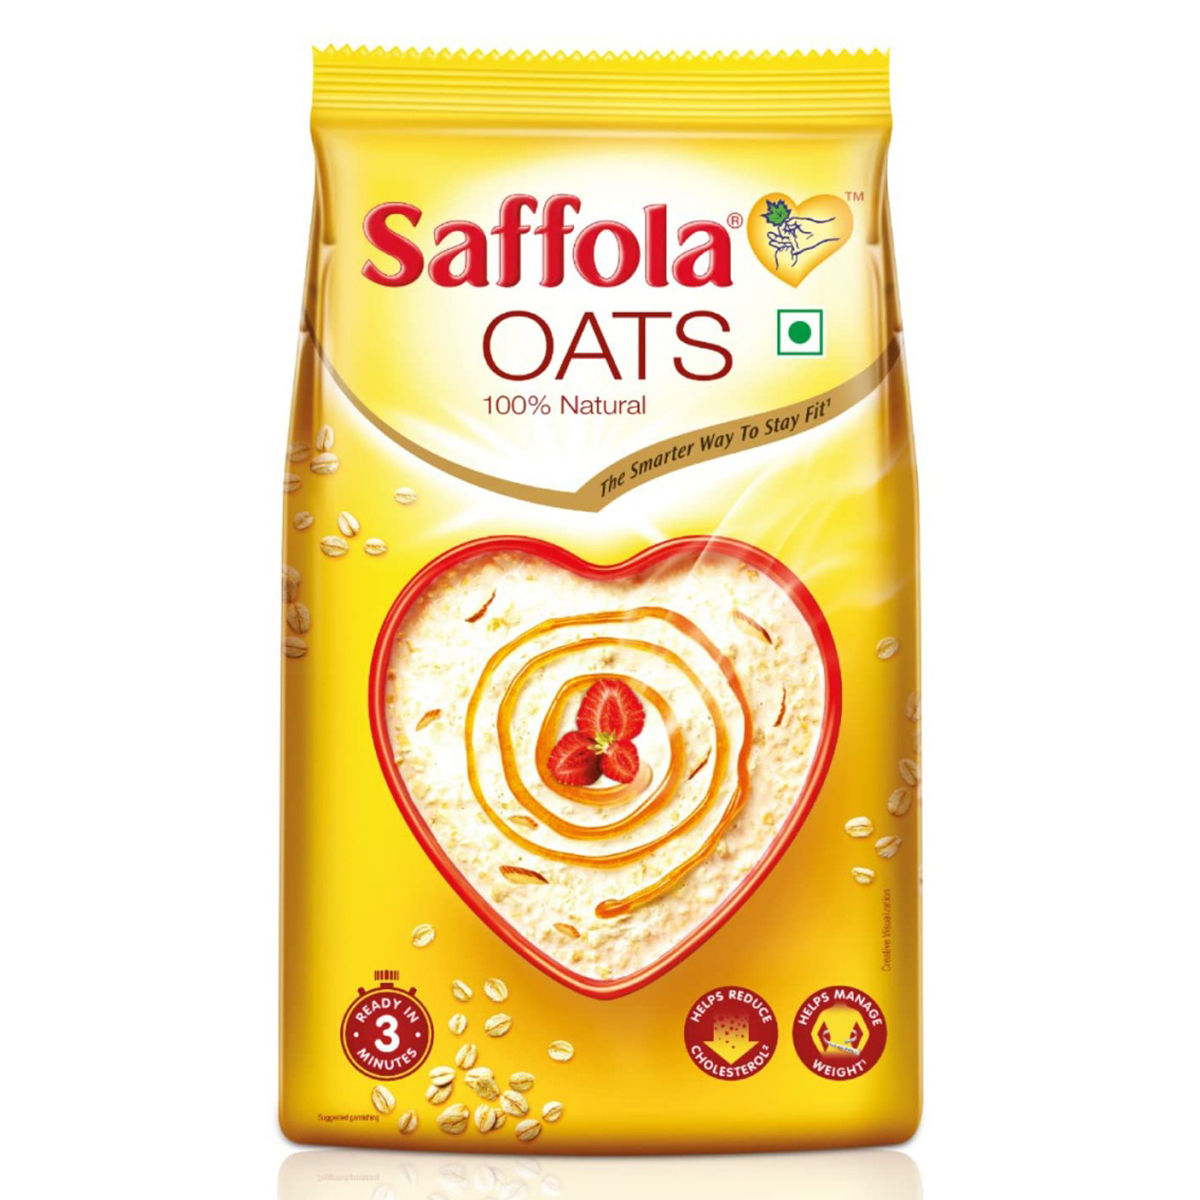 Buy Saffola Oats, 1 kg Refill Pack Online